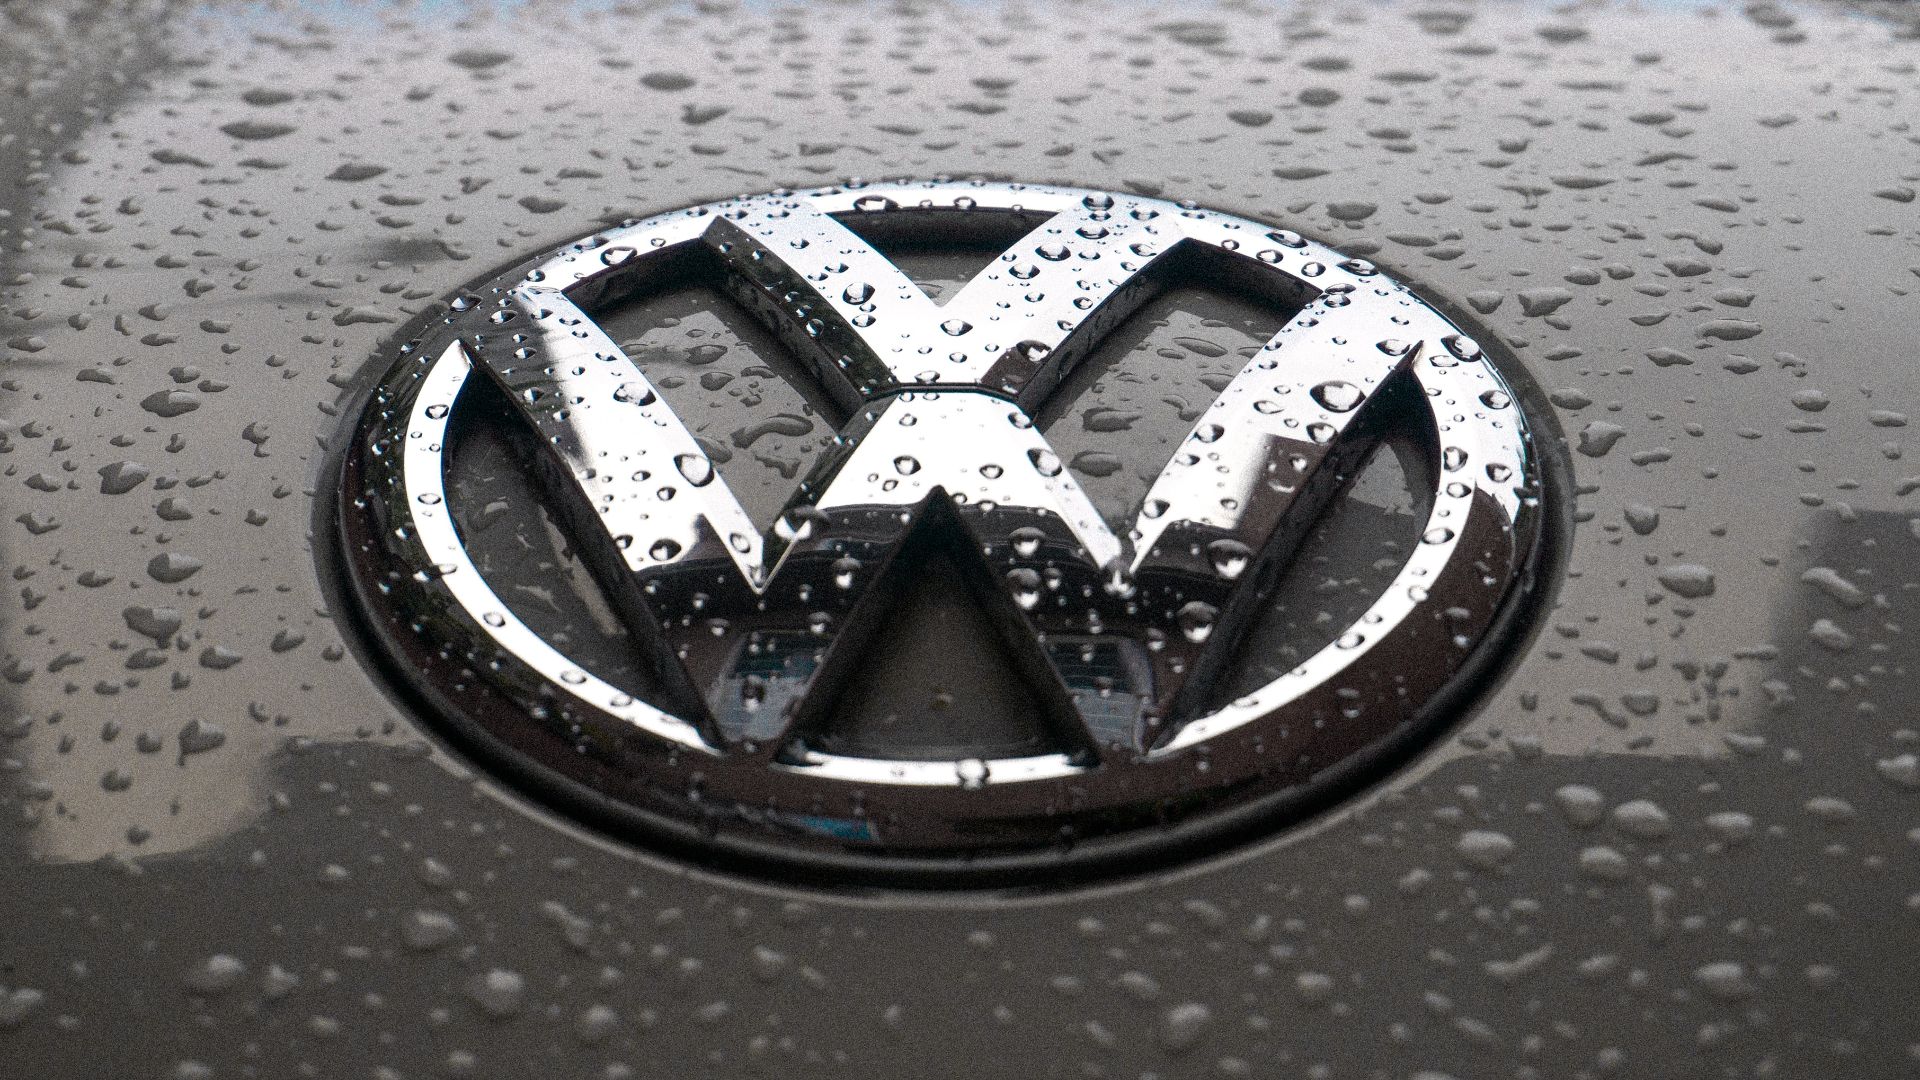 a close up of a volkswagen emblem on a wet surface.